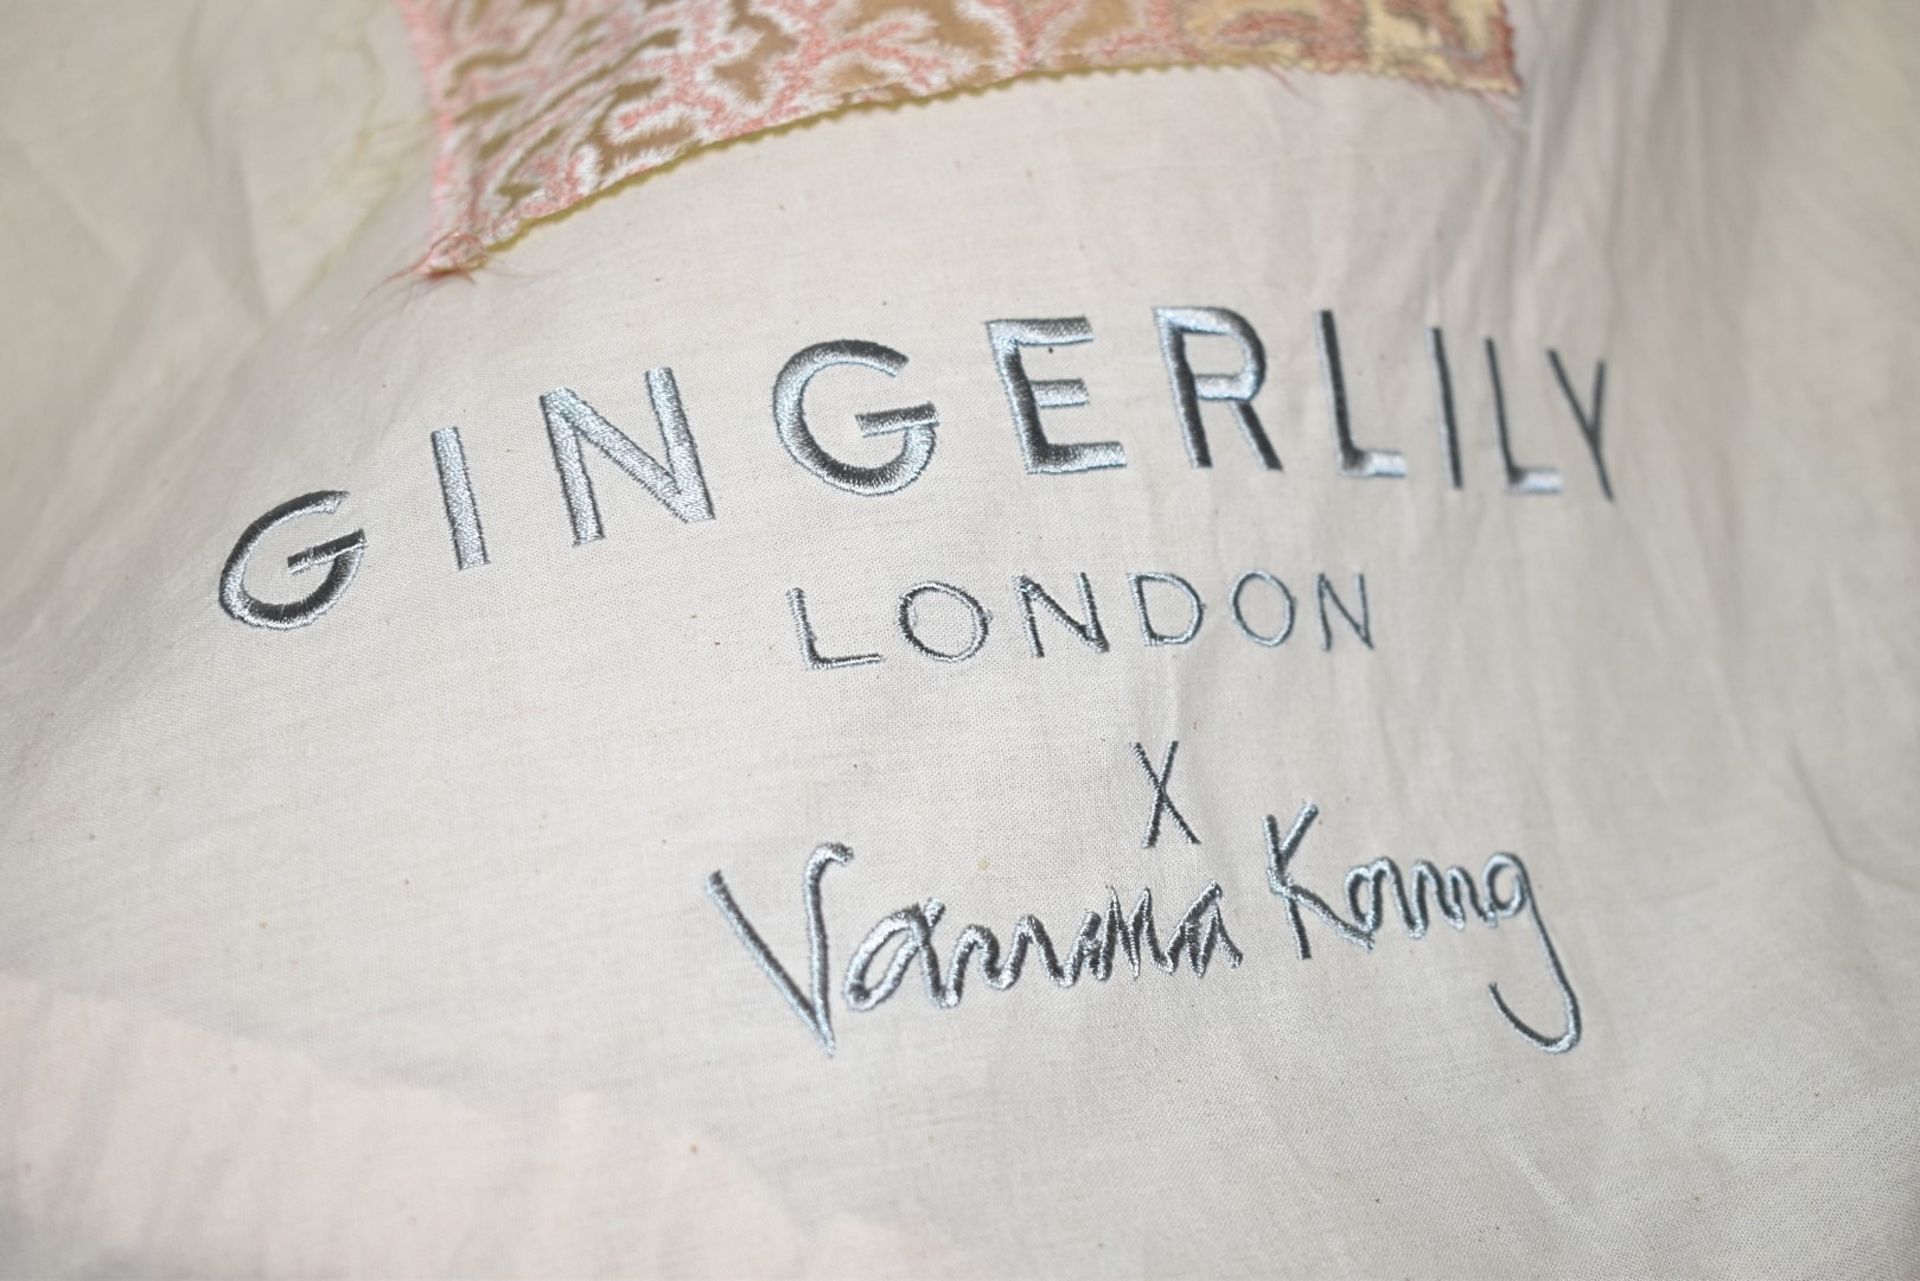 1 x GINGERLILY x Vanessa Konig 'Coral Fern' Luxury Bolster Cushion, in Peach (46cm x 20cm) - Image 2 of 7